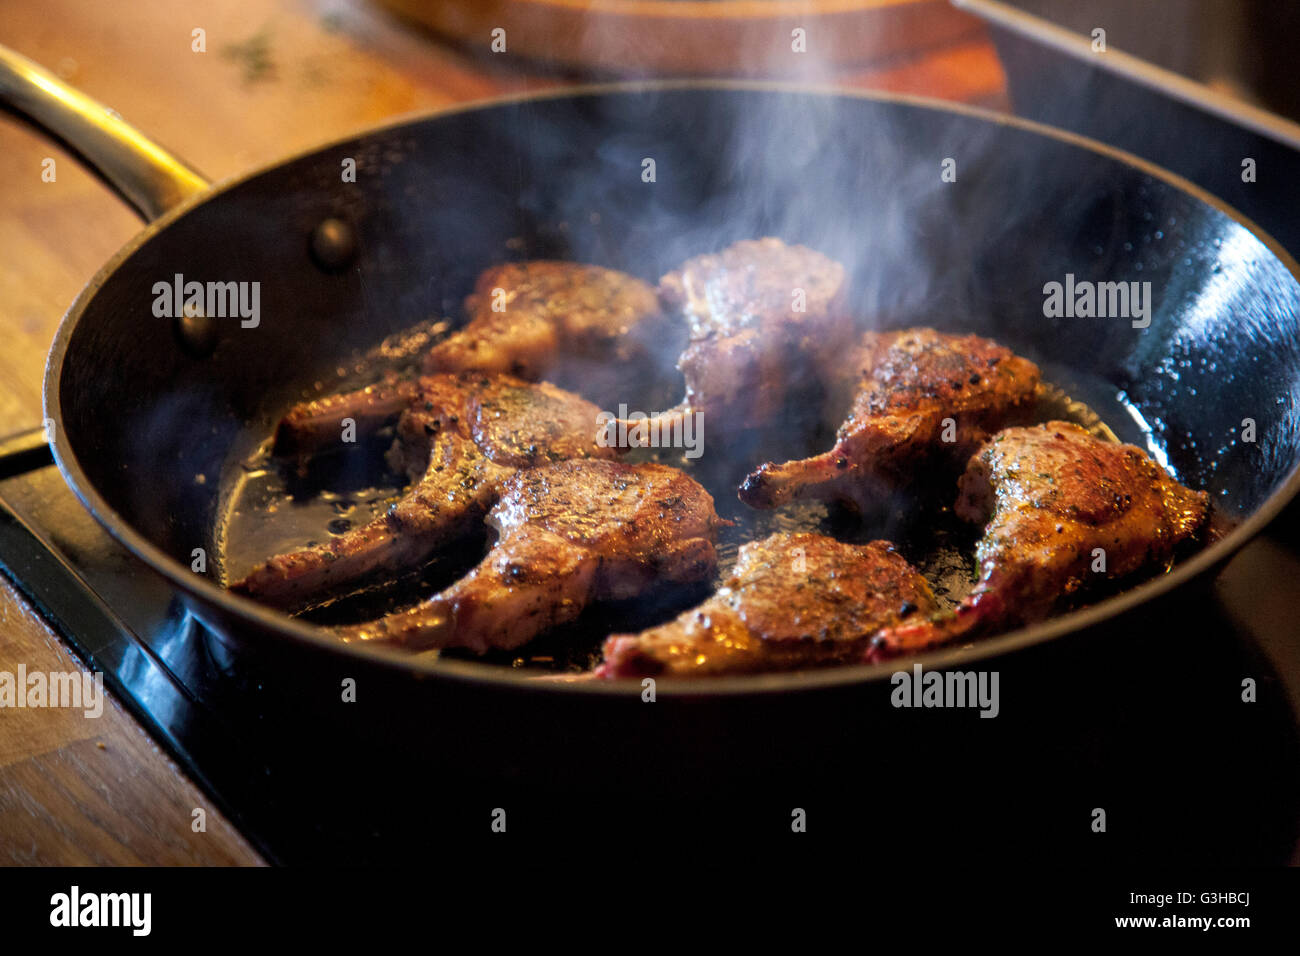 Lamb ribs in a frying pan Stock Photo